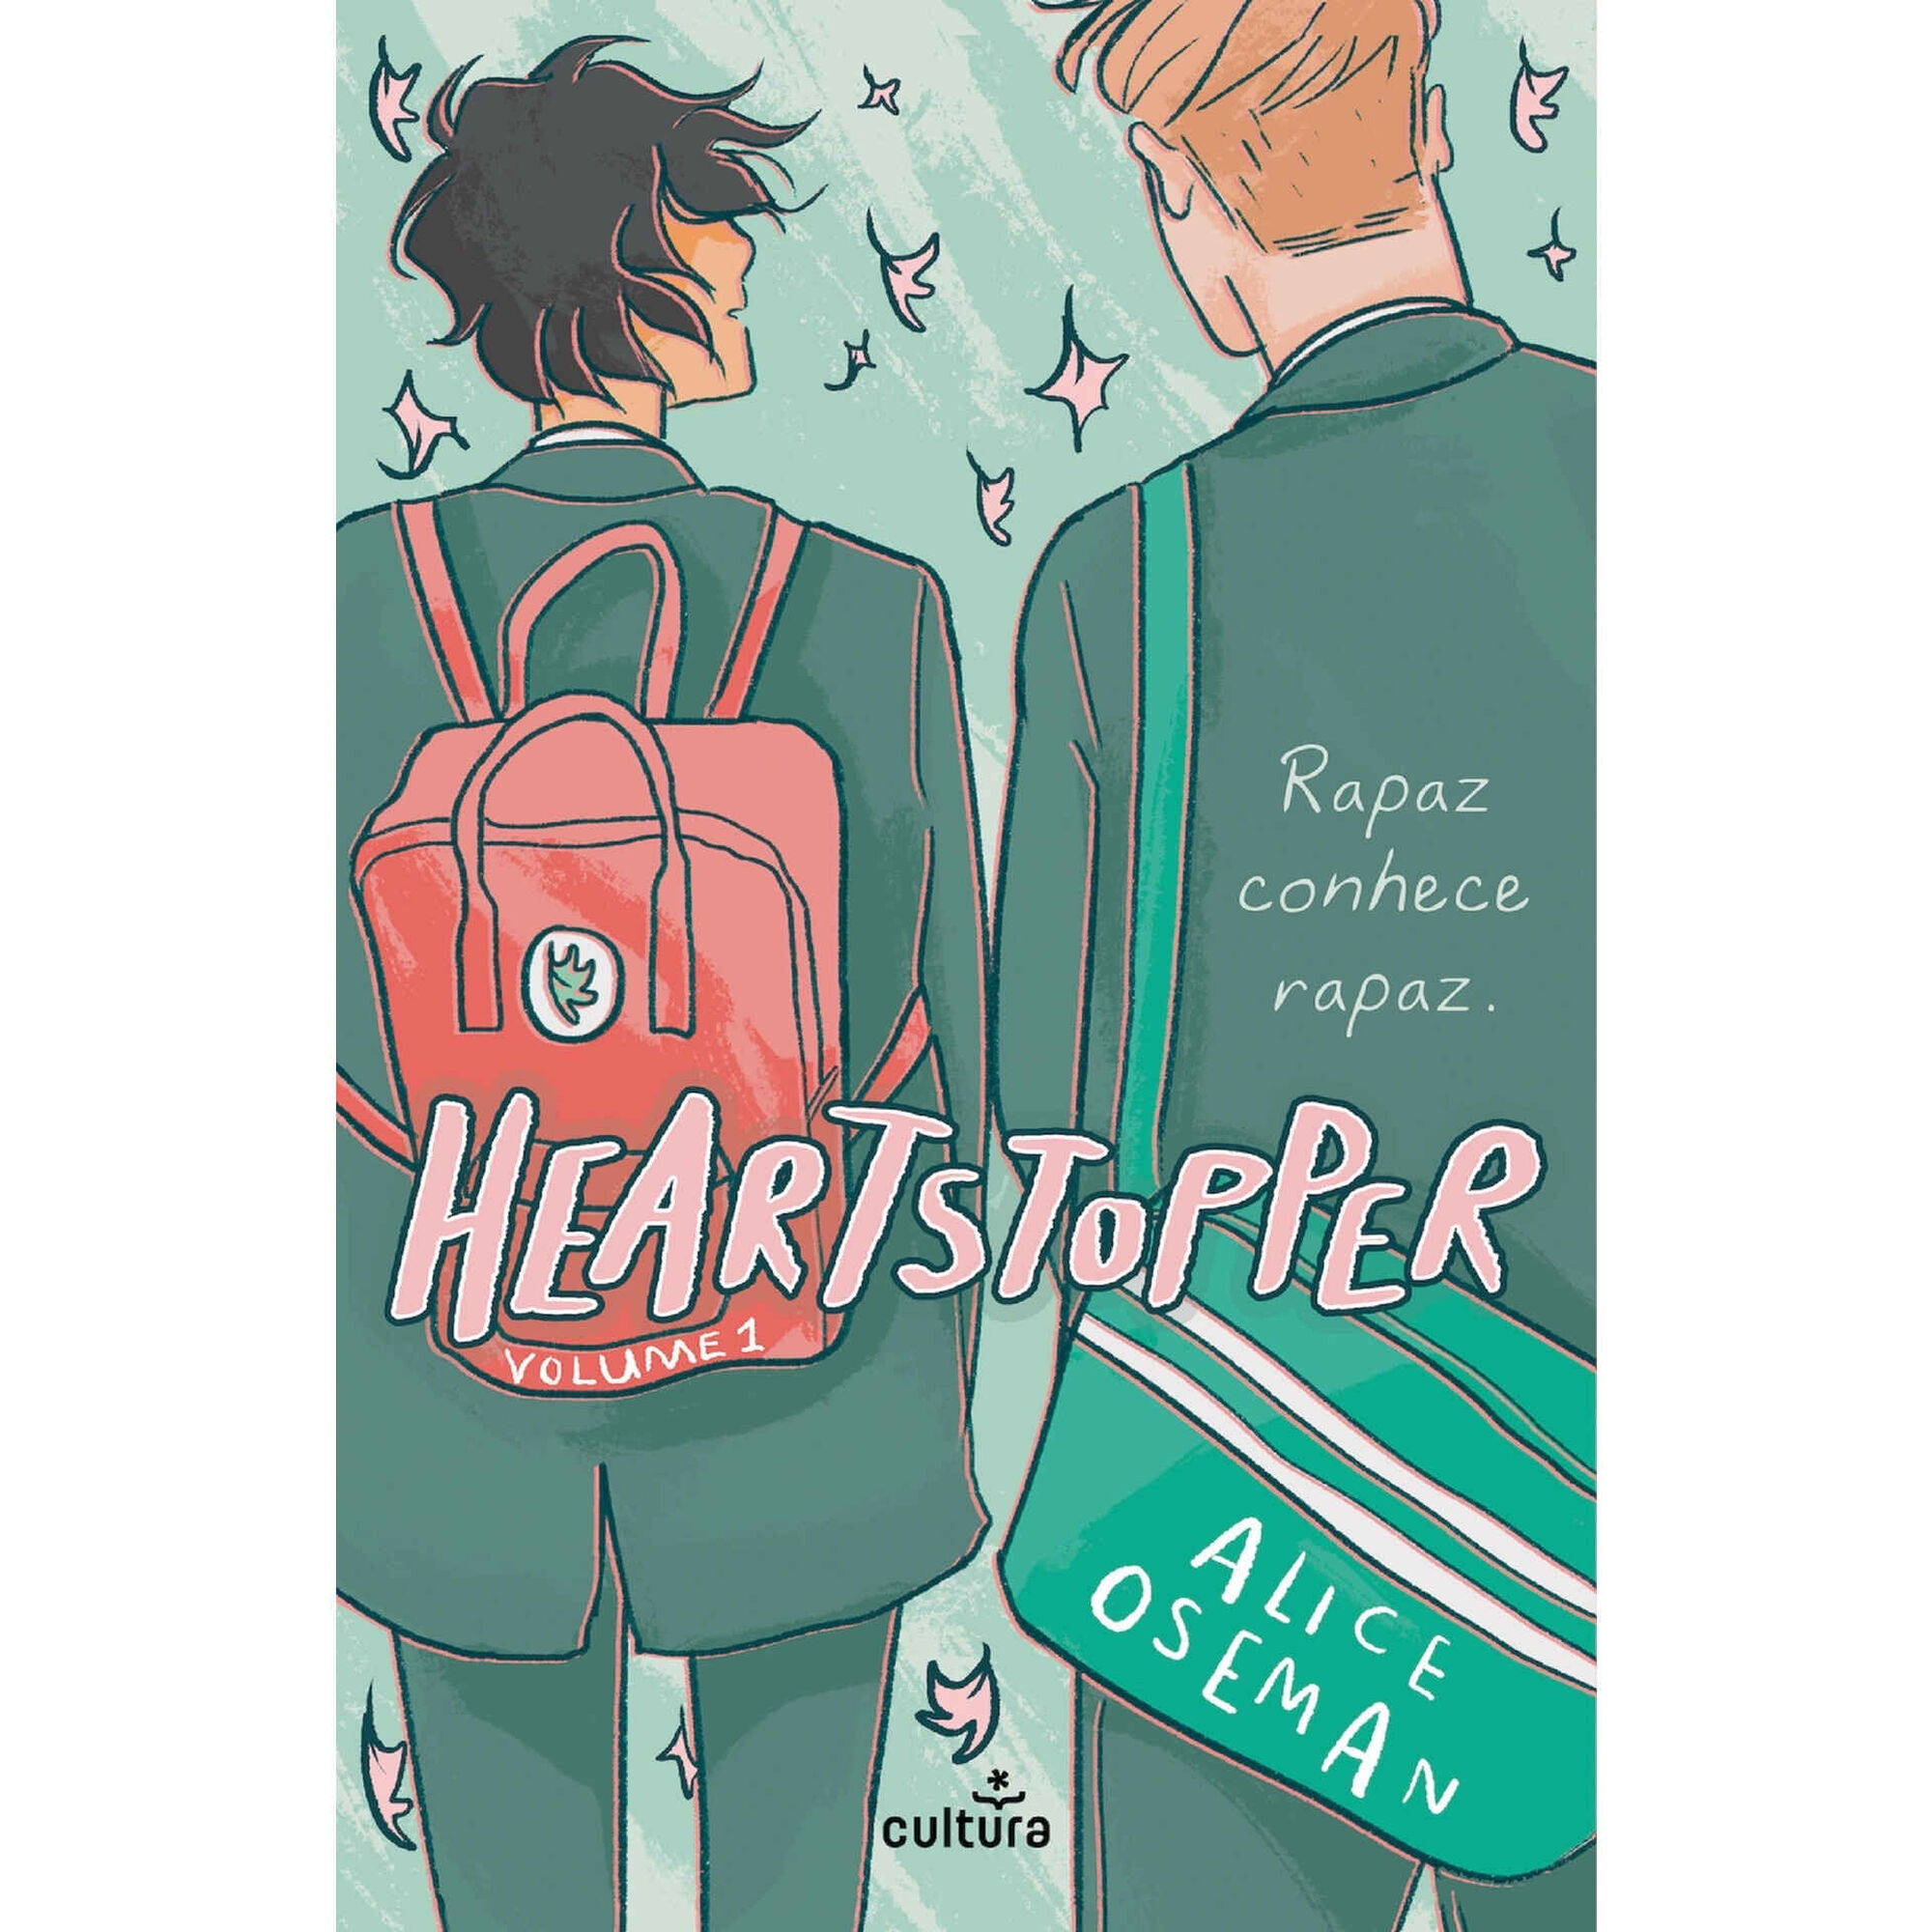 Heartstopper Nº 1 - Rapaz Conhece Rapaz